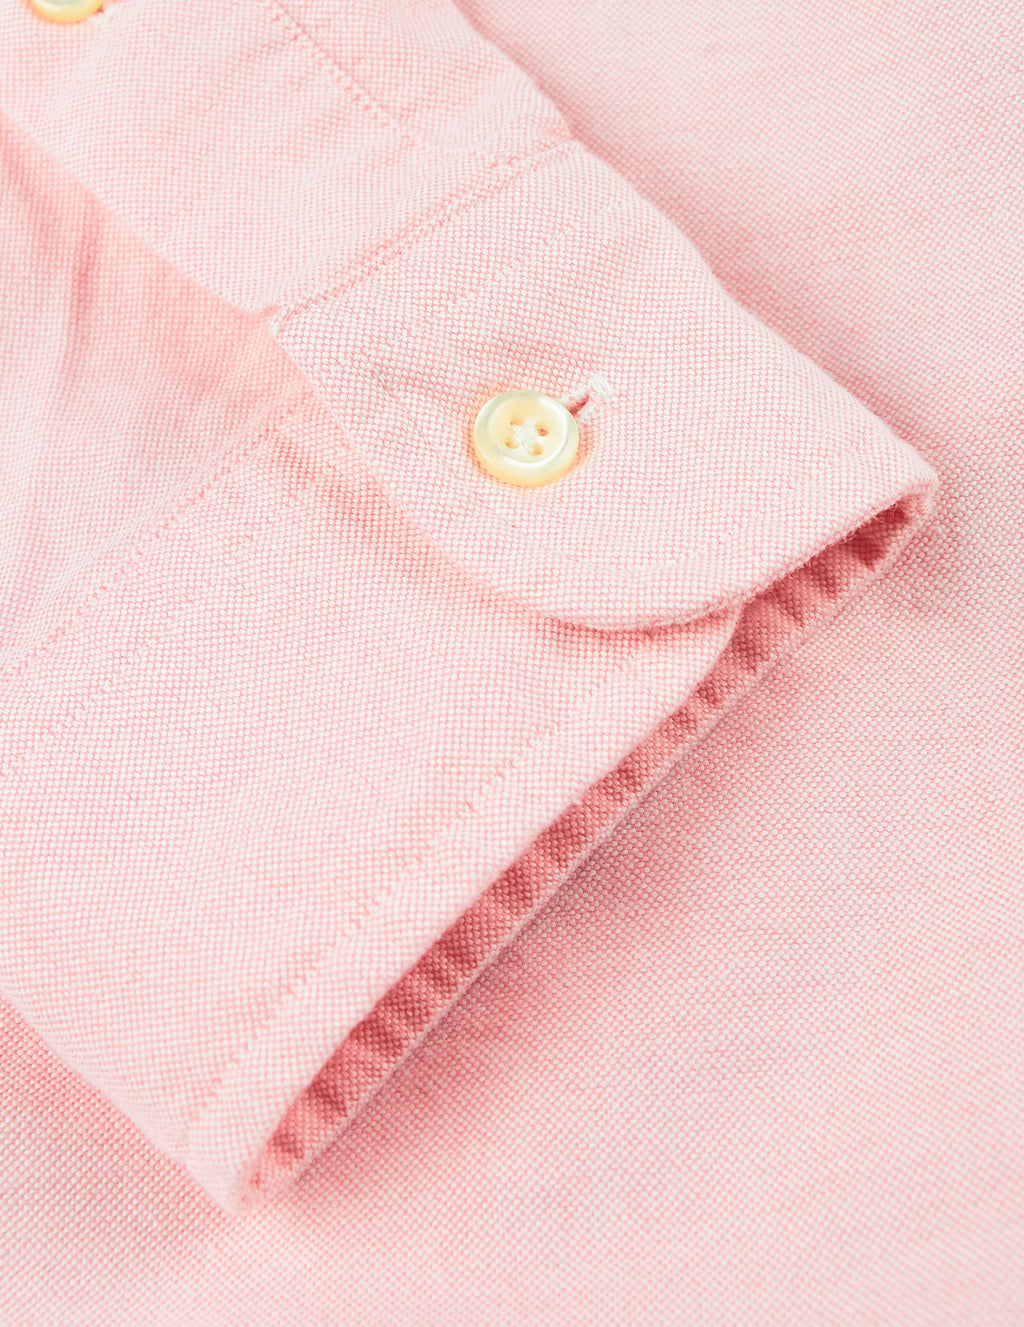 ralph lauren slim fit oxford shirt pink